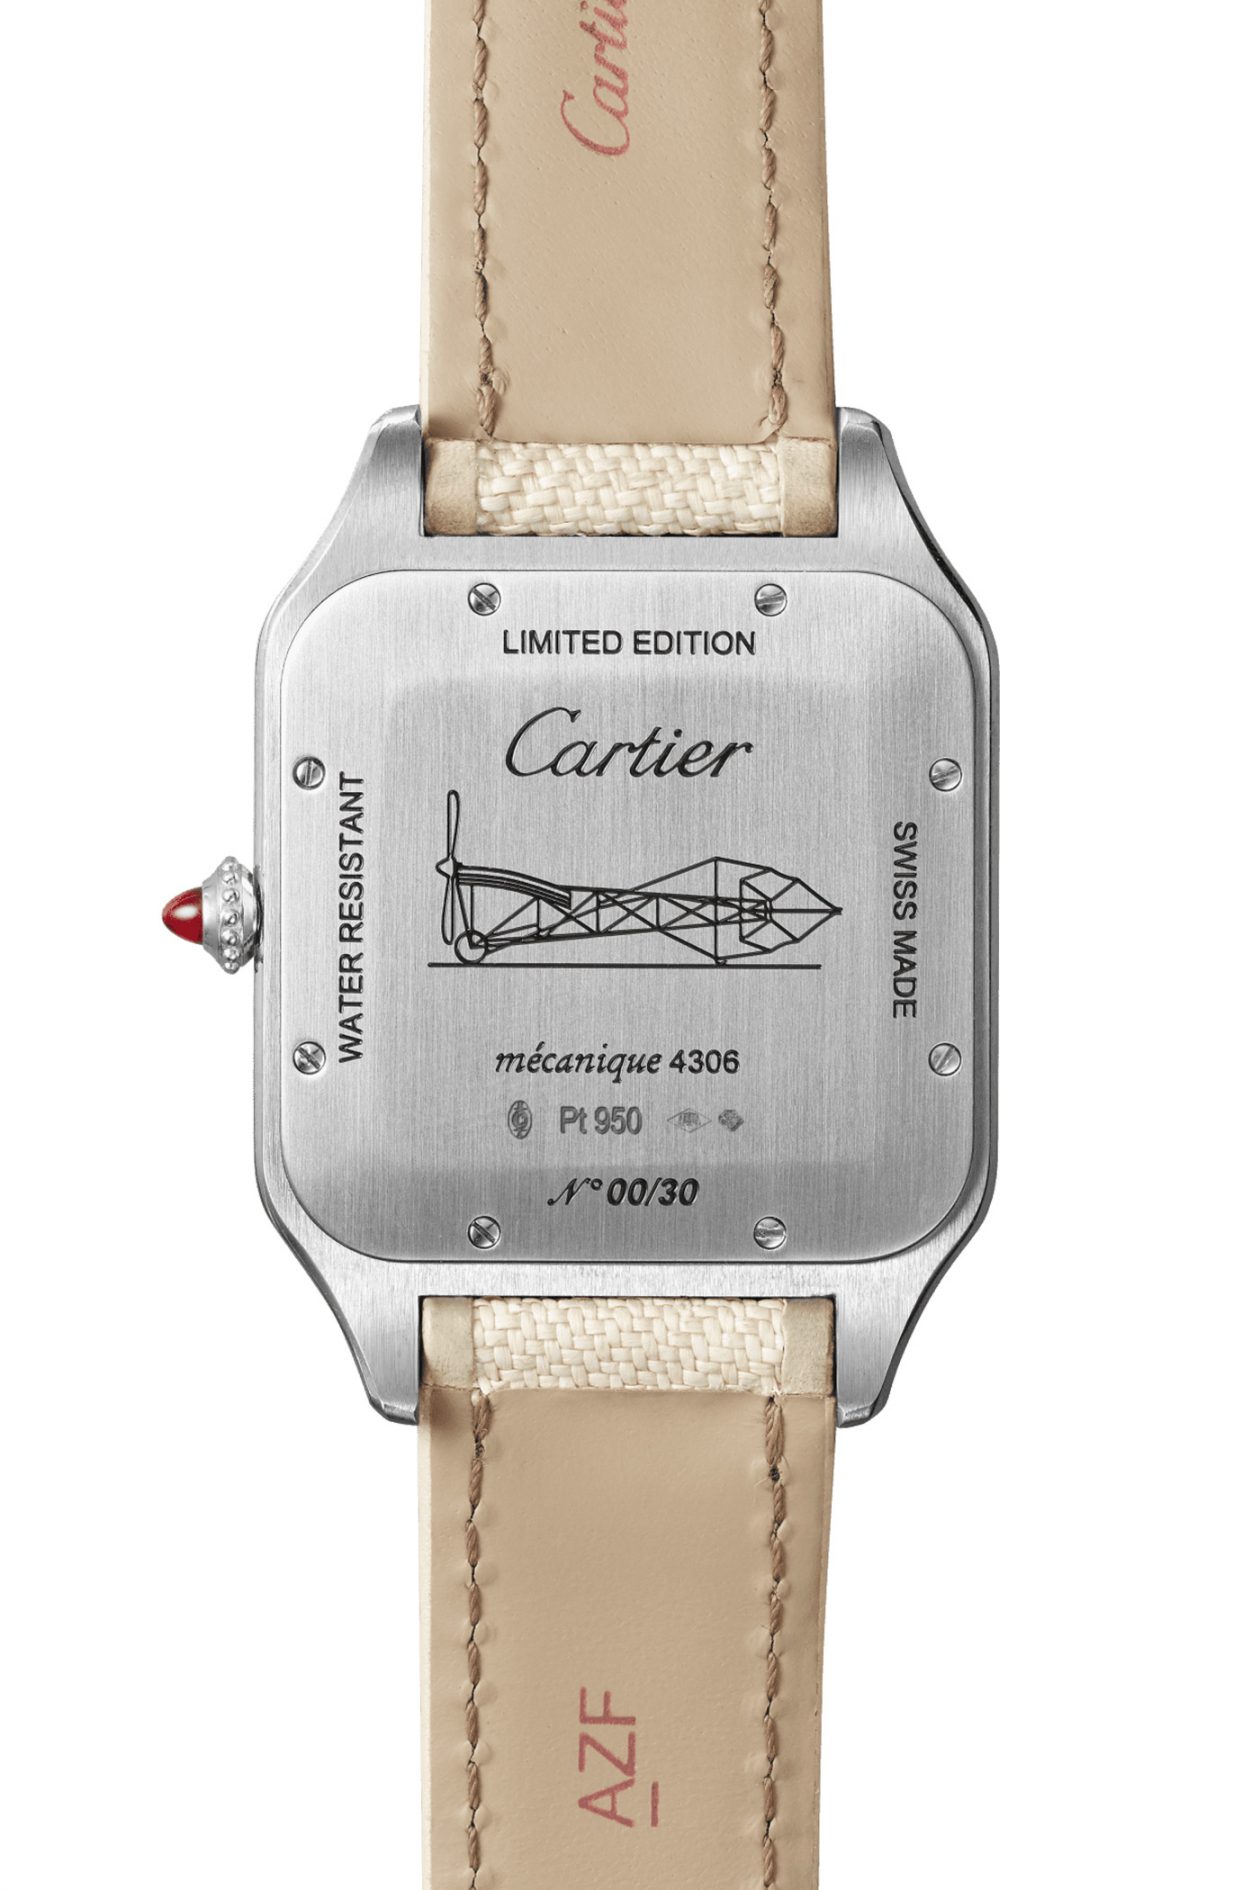 Cartier Santos-Dumont „n°14 bis 